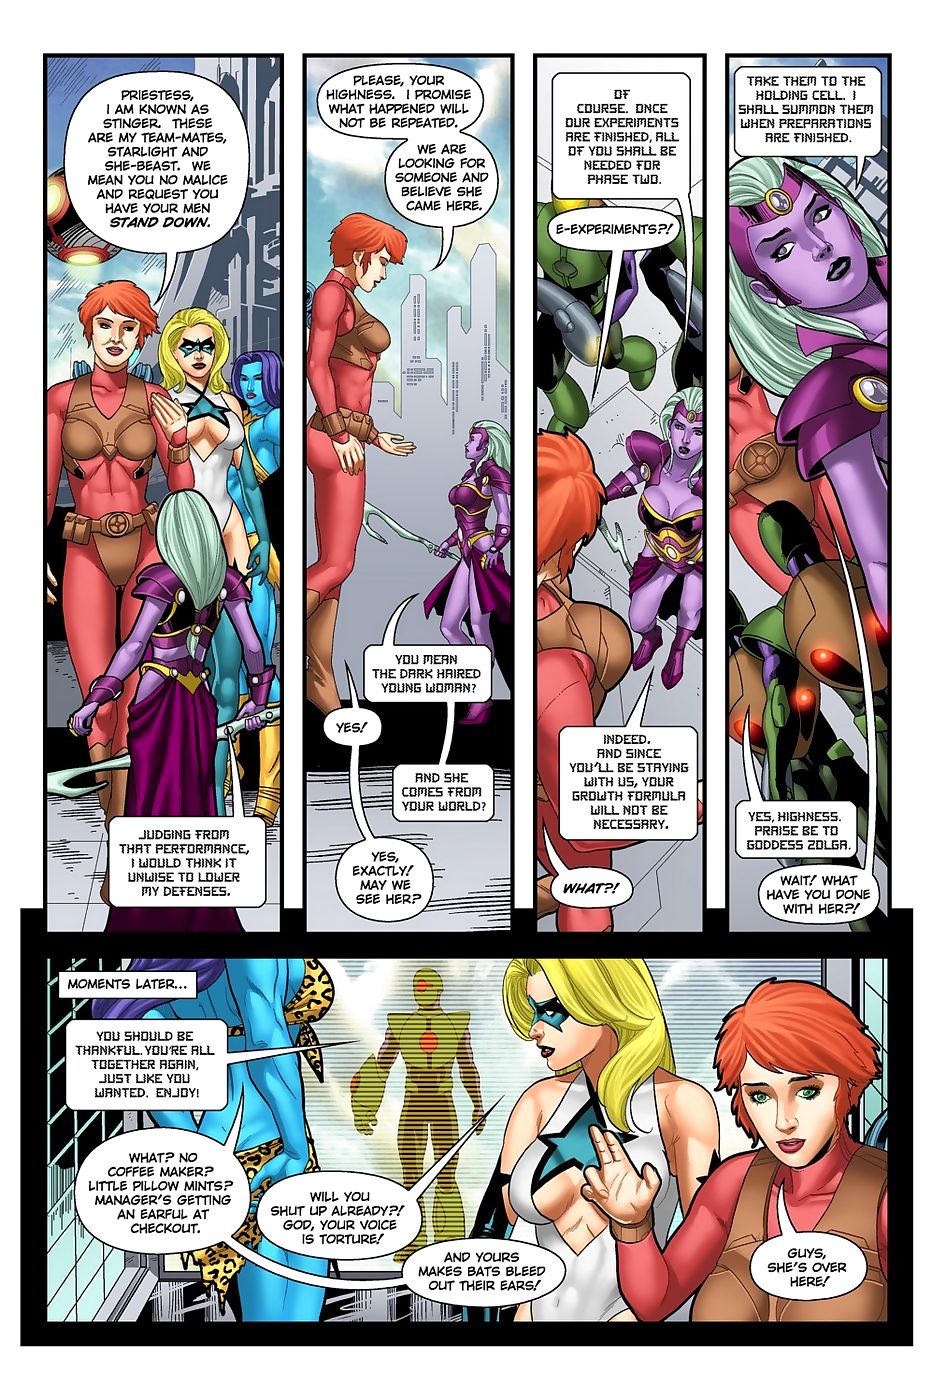 Giantness- Power Patrol 03 page 1